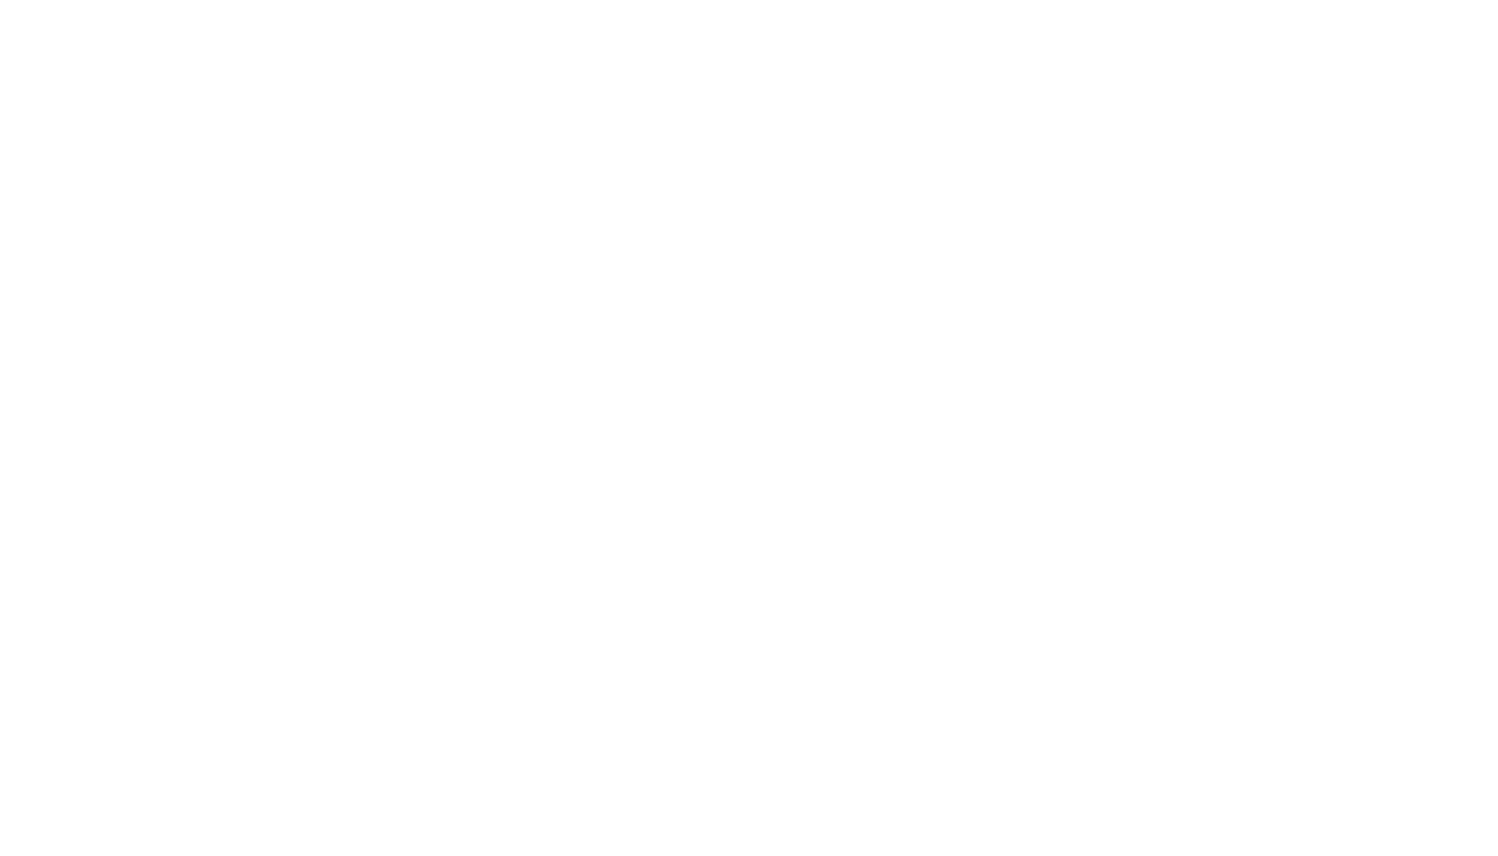 PANTALA-ID-BALNCOAZUL-(1)-(1)-1.png